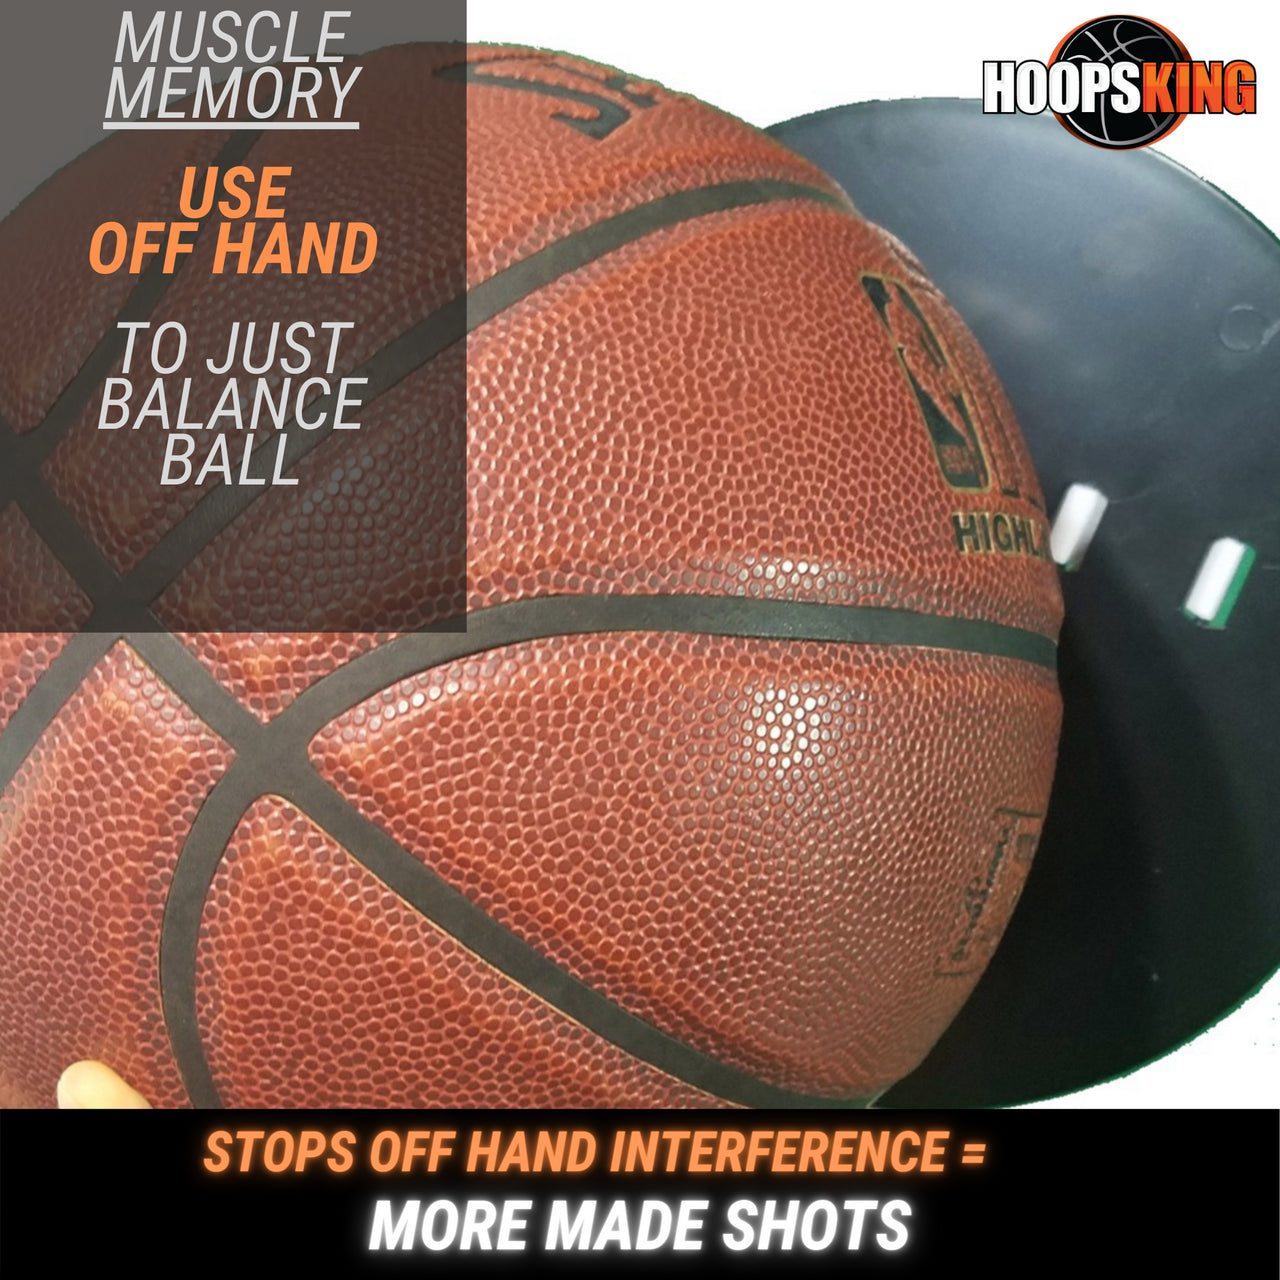 Basketball Shooting Equipment to Perfect Your Shot